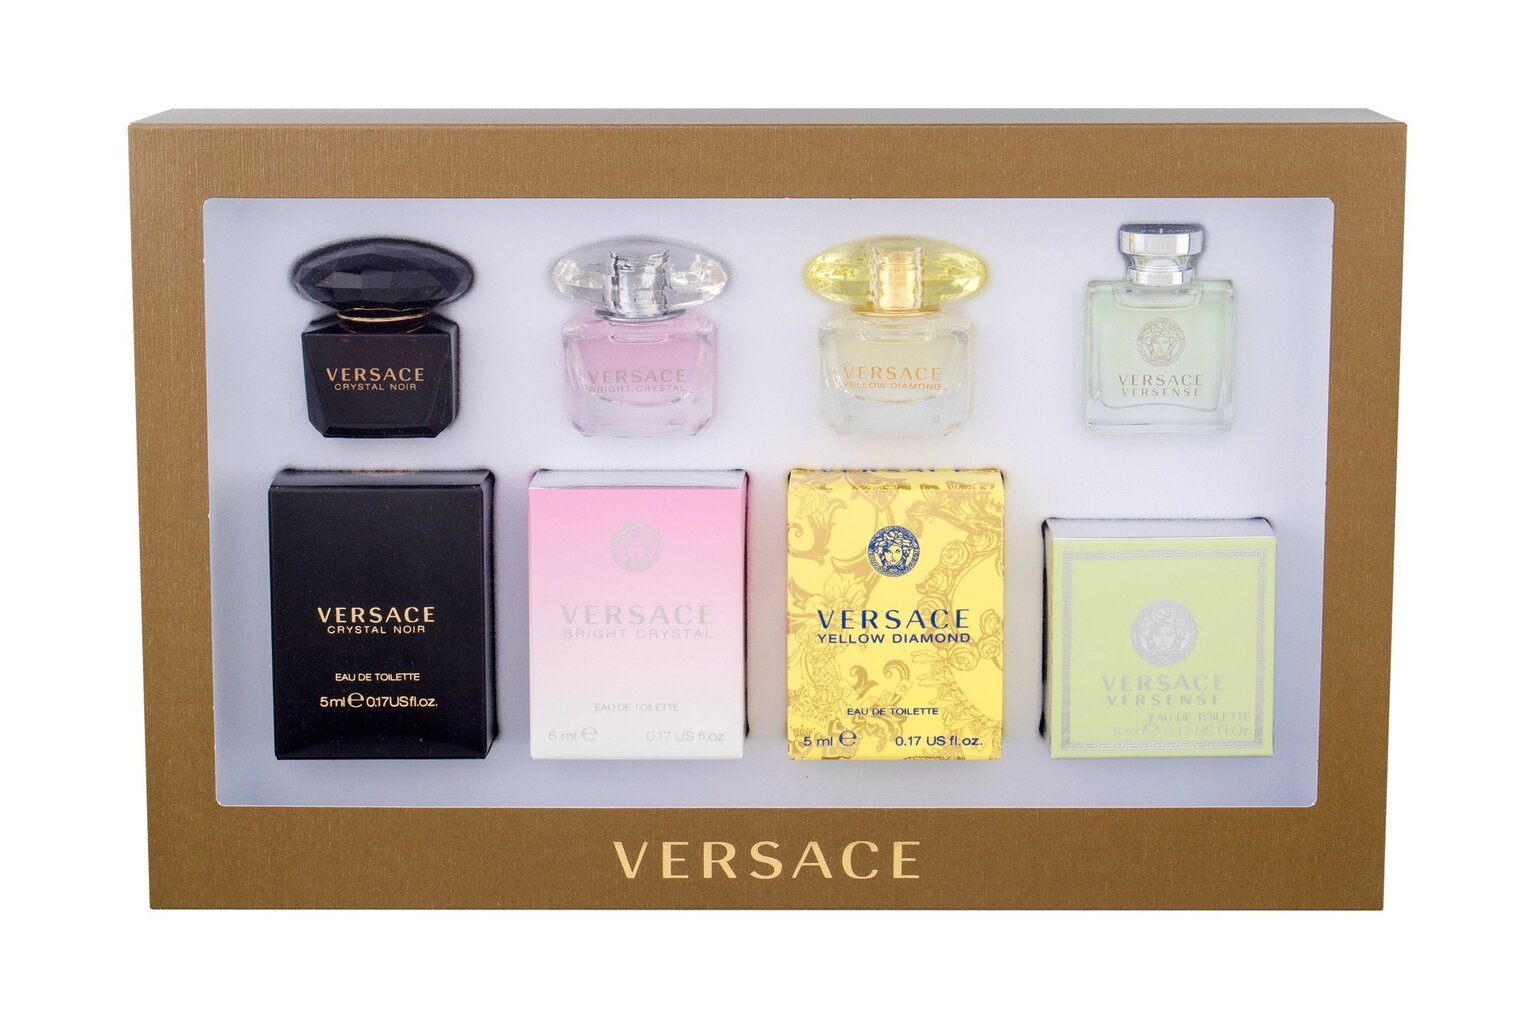 Perfume Mini: Versace Bright Crystal, 5 ml/0.17 fl oz, new in box